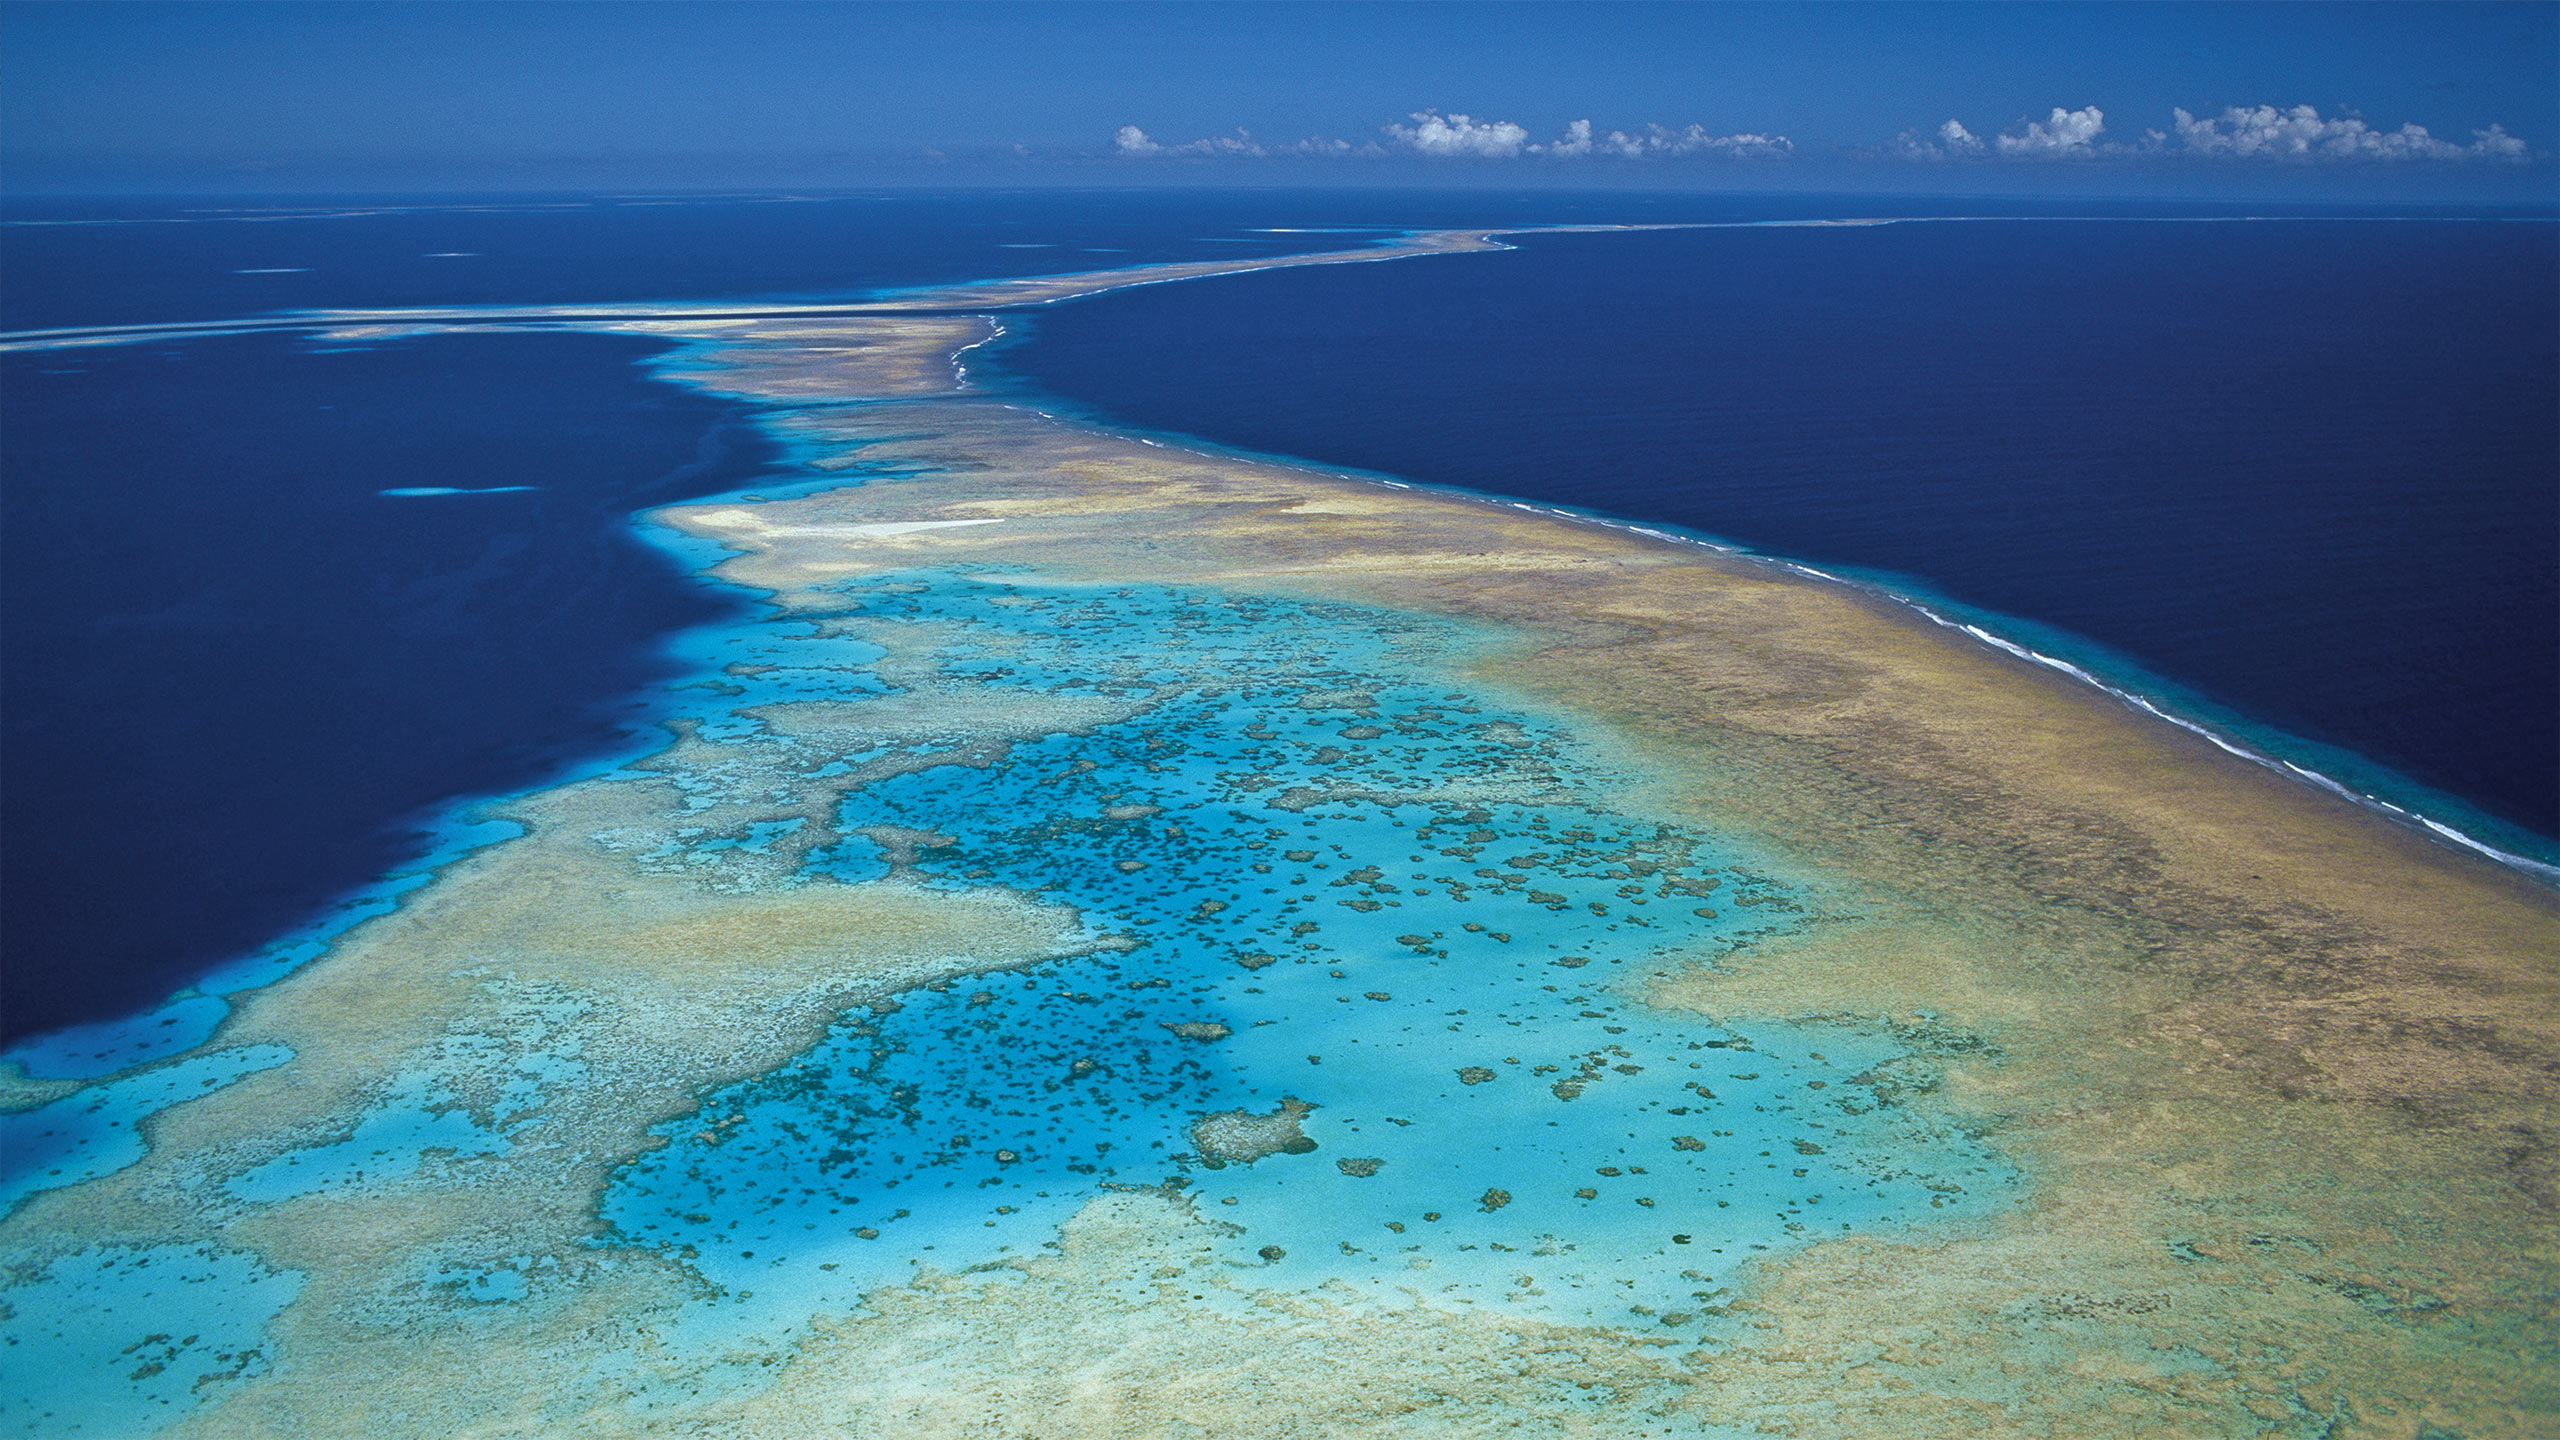 Solomon Islands drone footage by superyacht